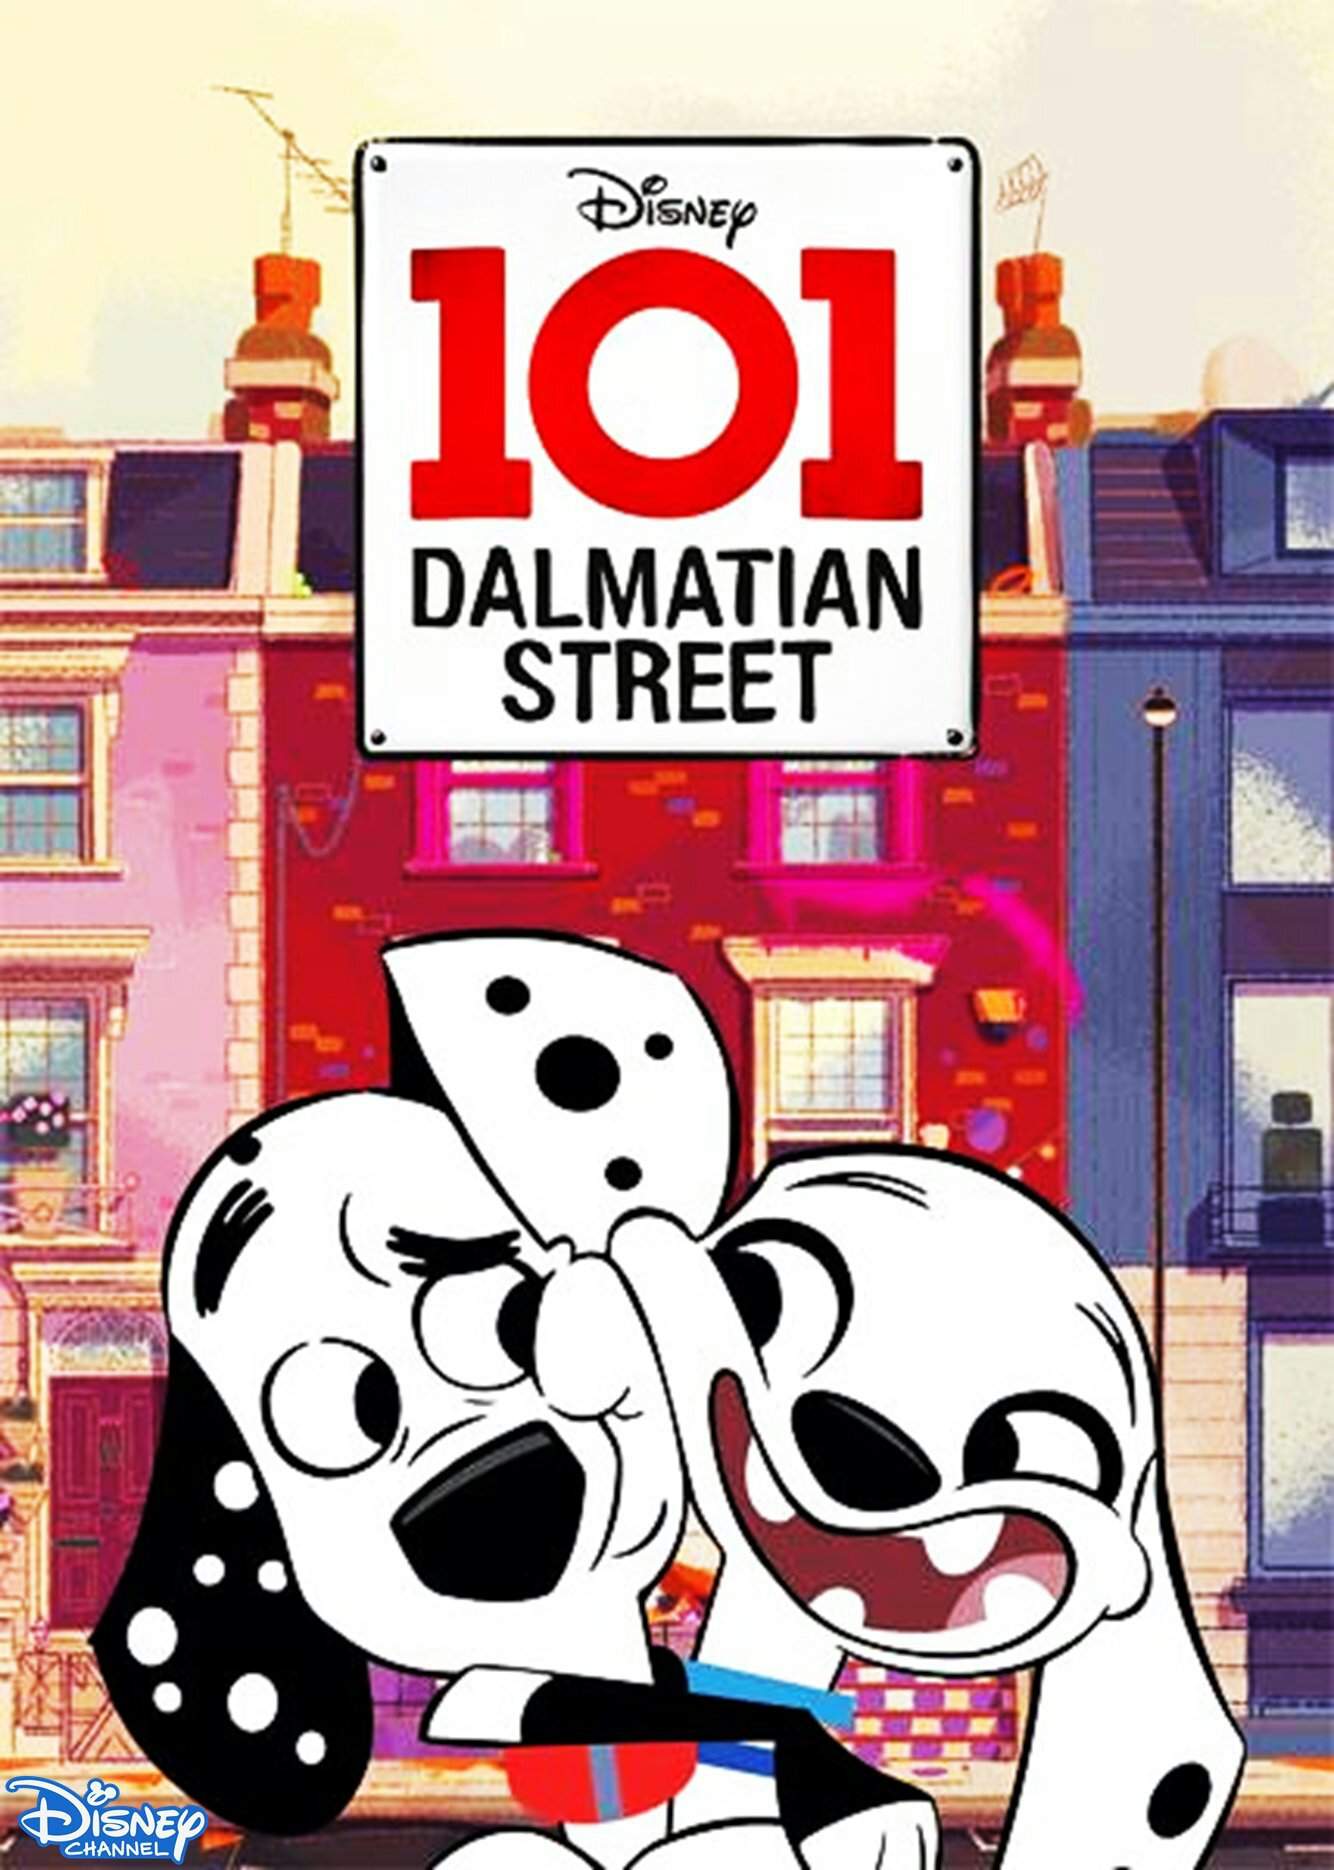 Dalmatian Street